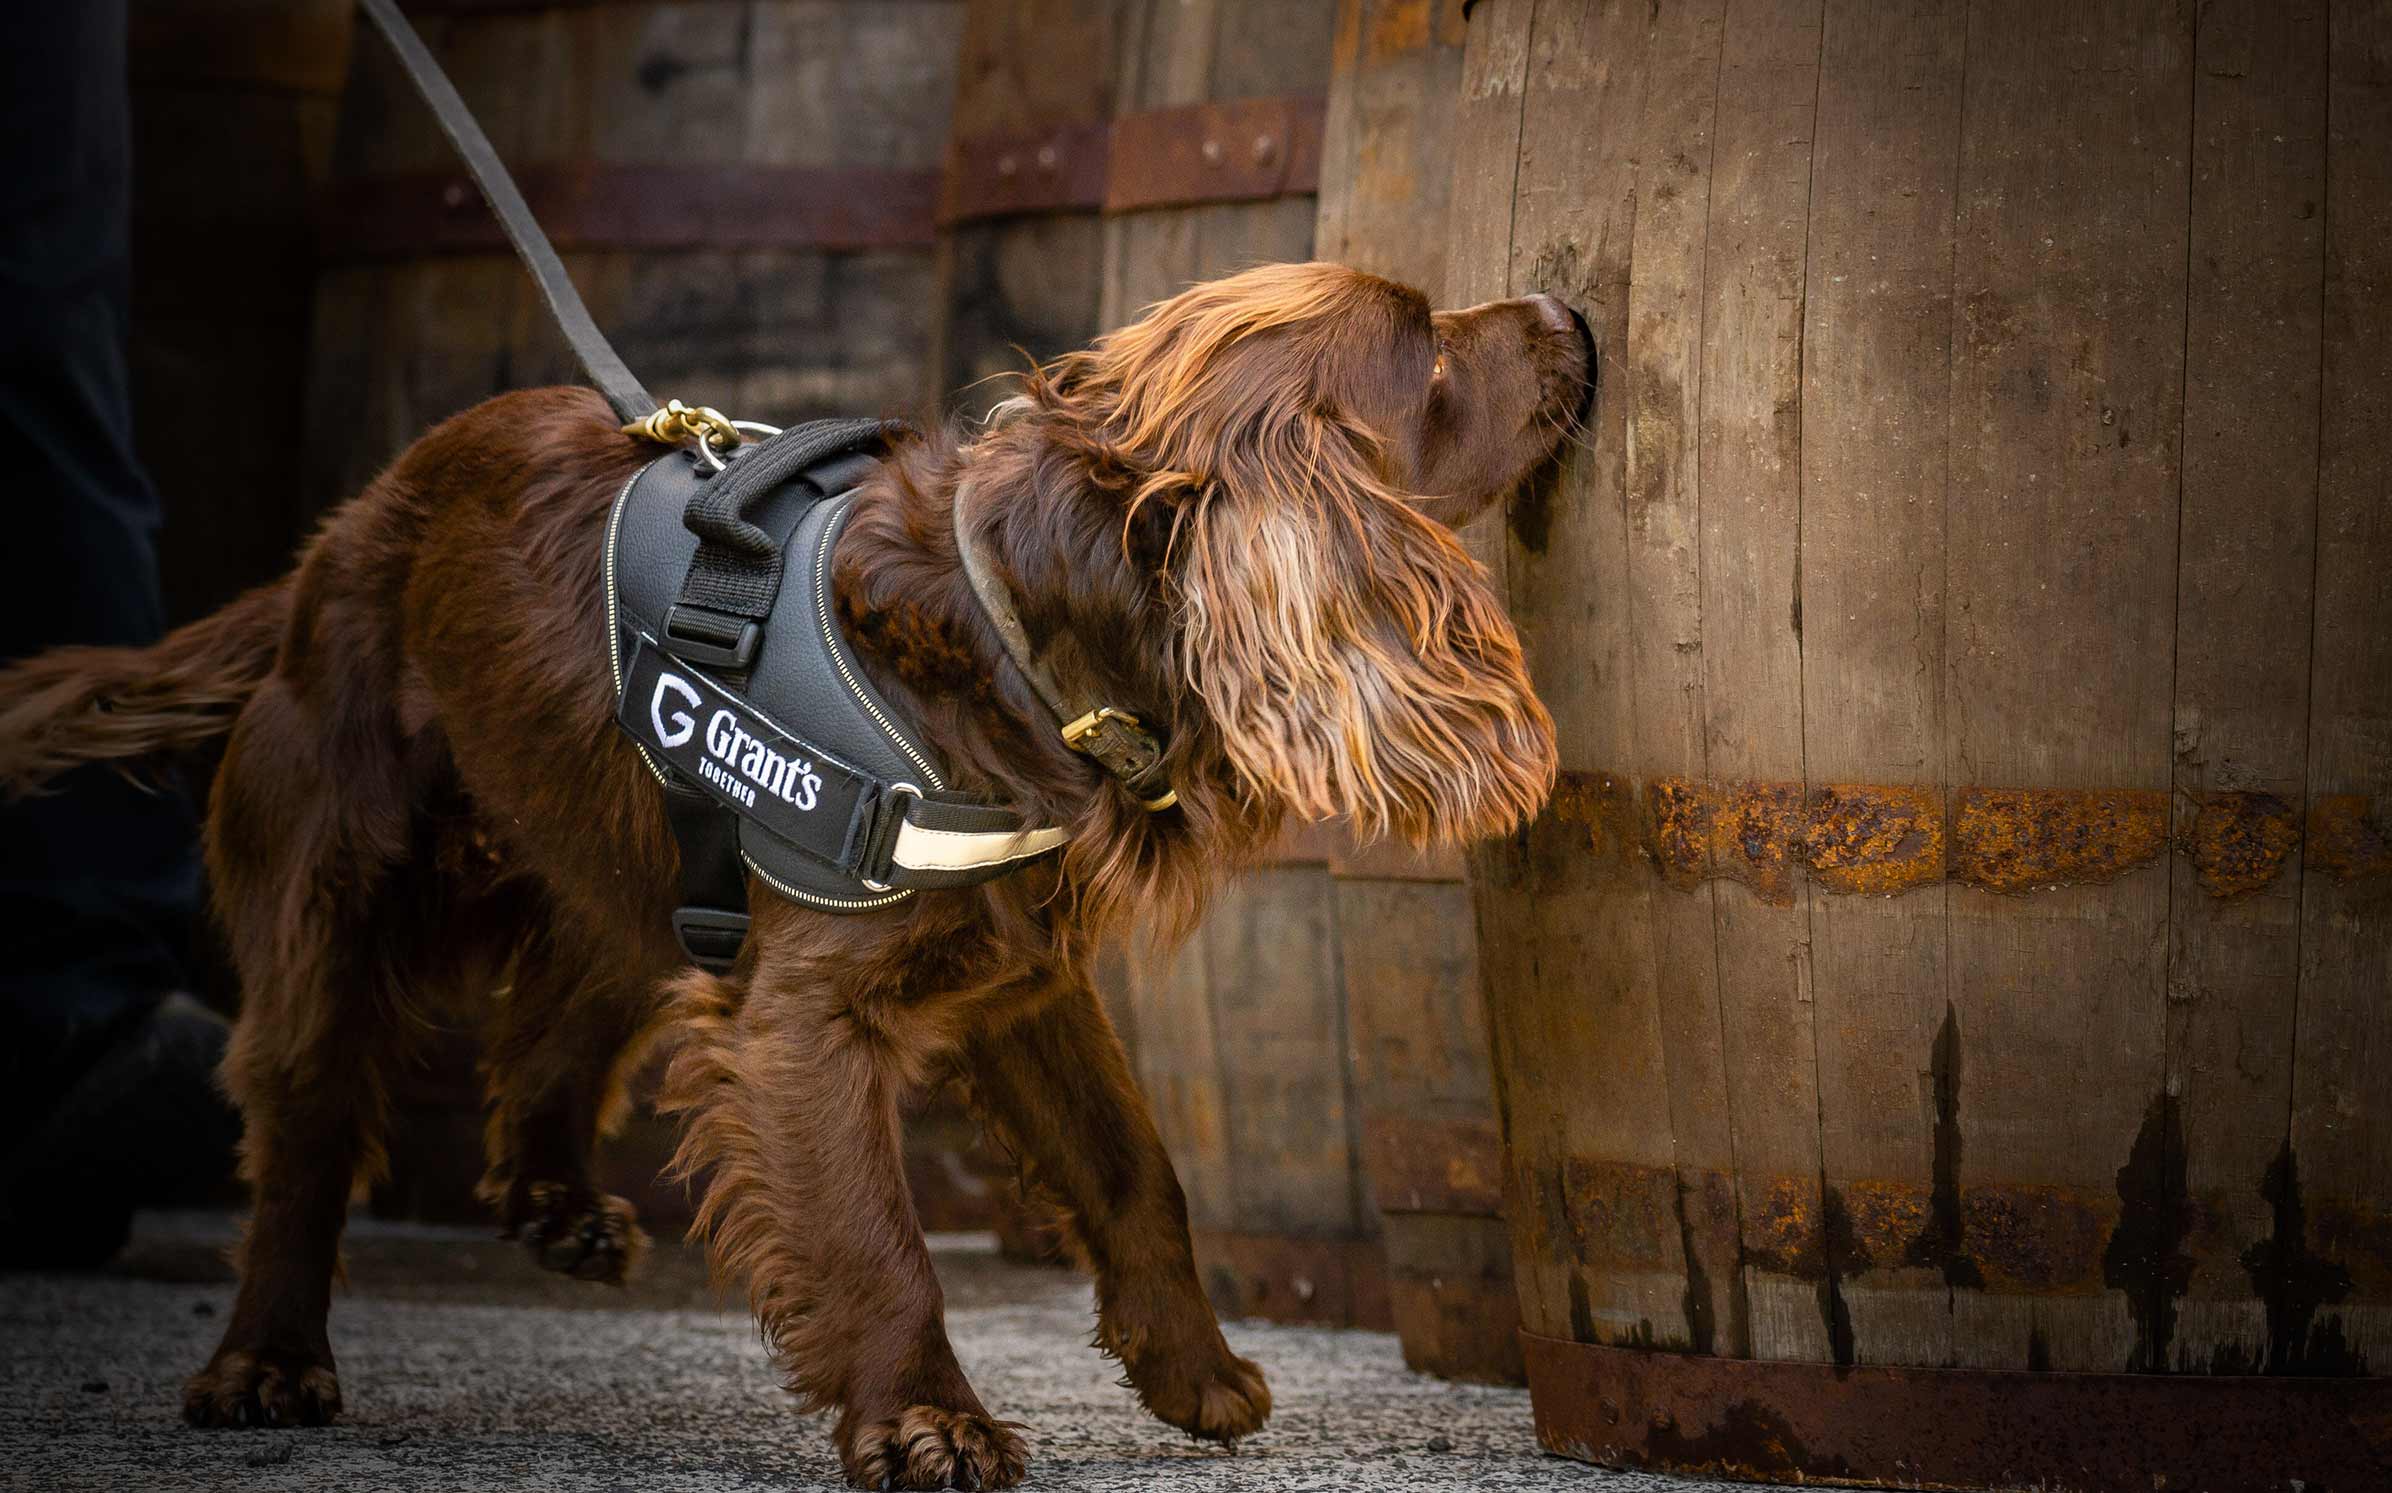 Rocco the dog, a cokcier spaniel, on duty sniffing whisky barrel